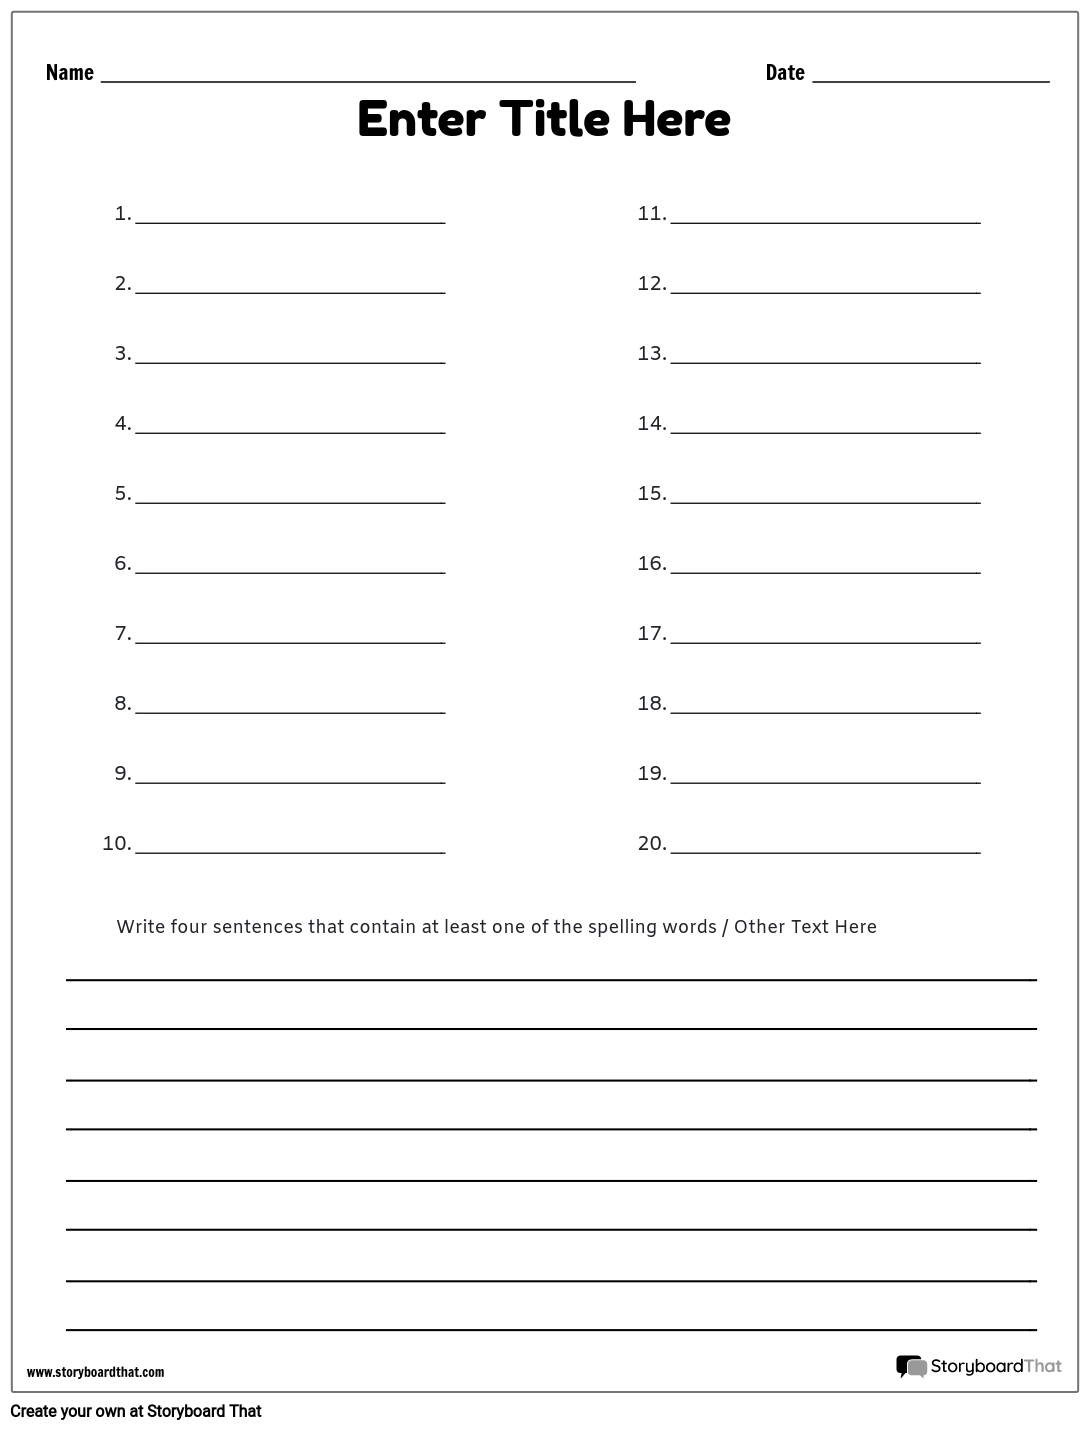 spelling-test-sentences-2-worksheet-templates